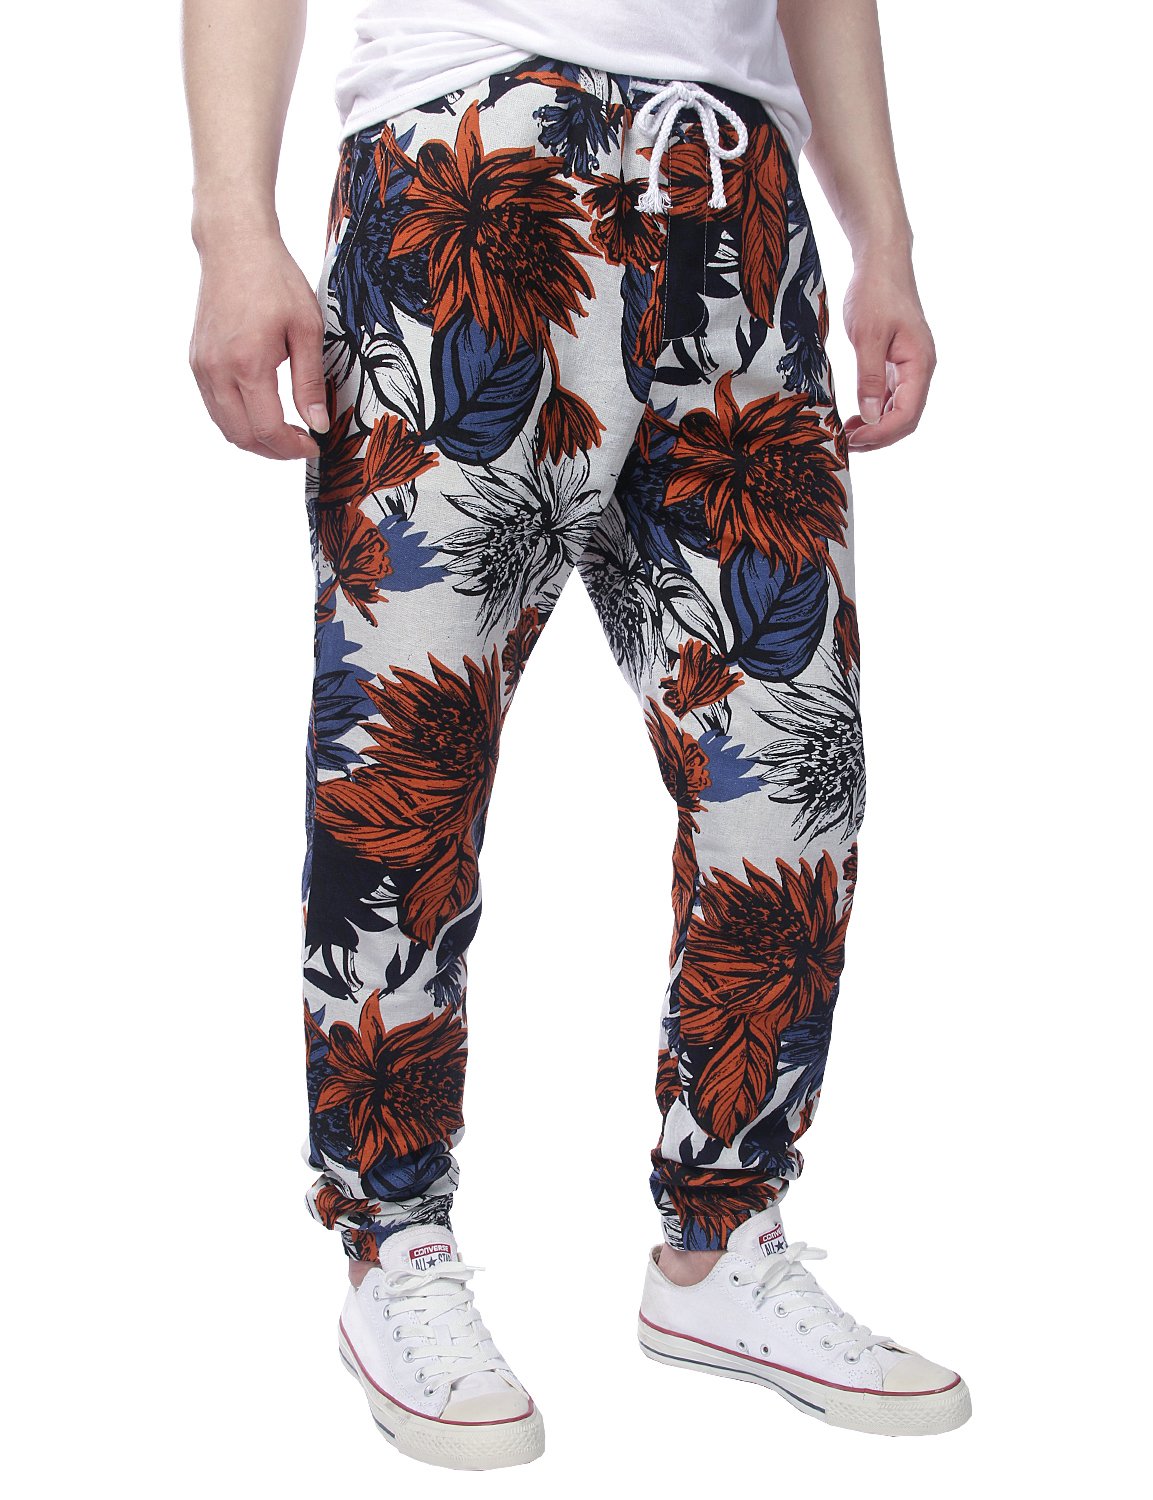 JOGAL Men's Jogger Cotton Pants Flower Printed Drawstring Trousers(Red)